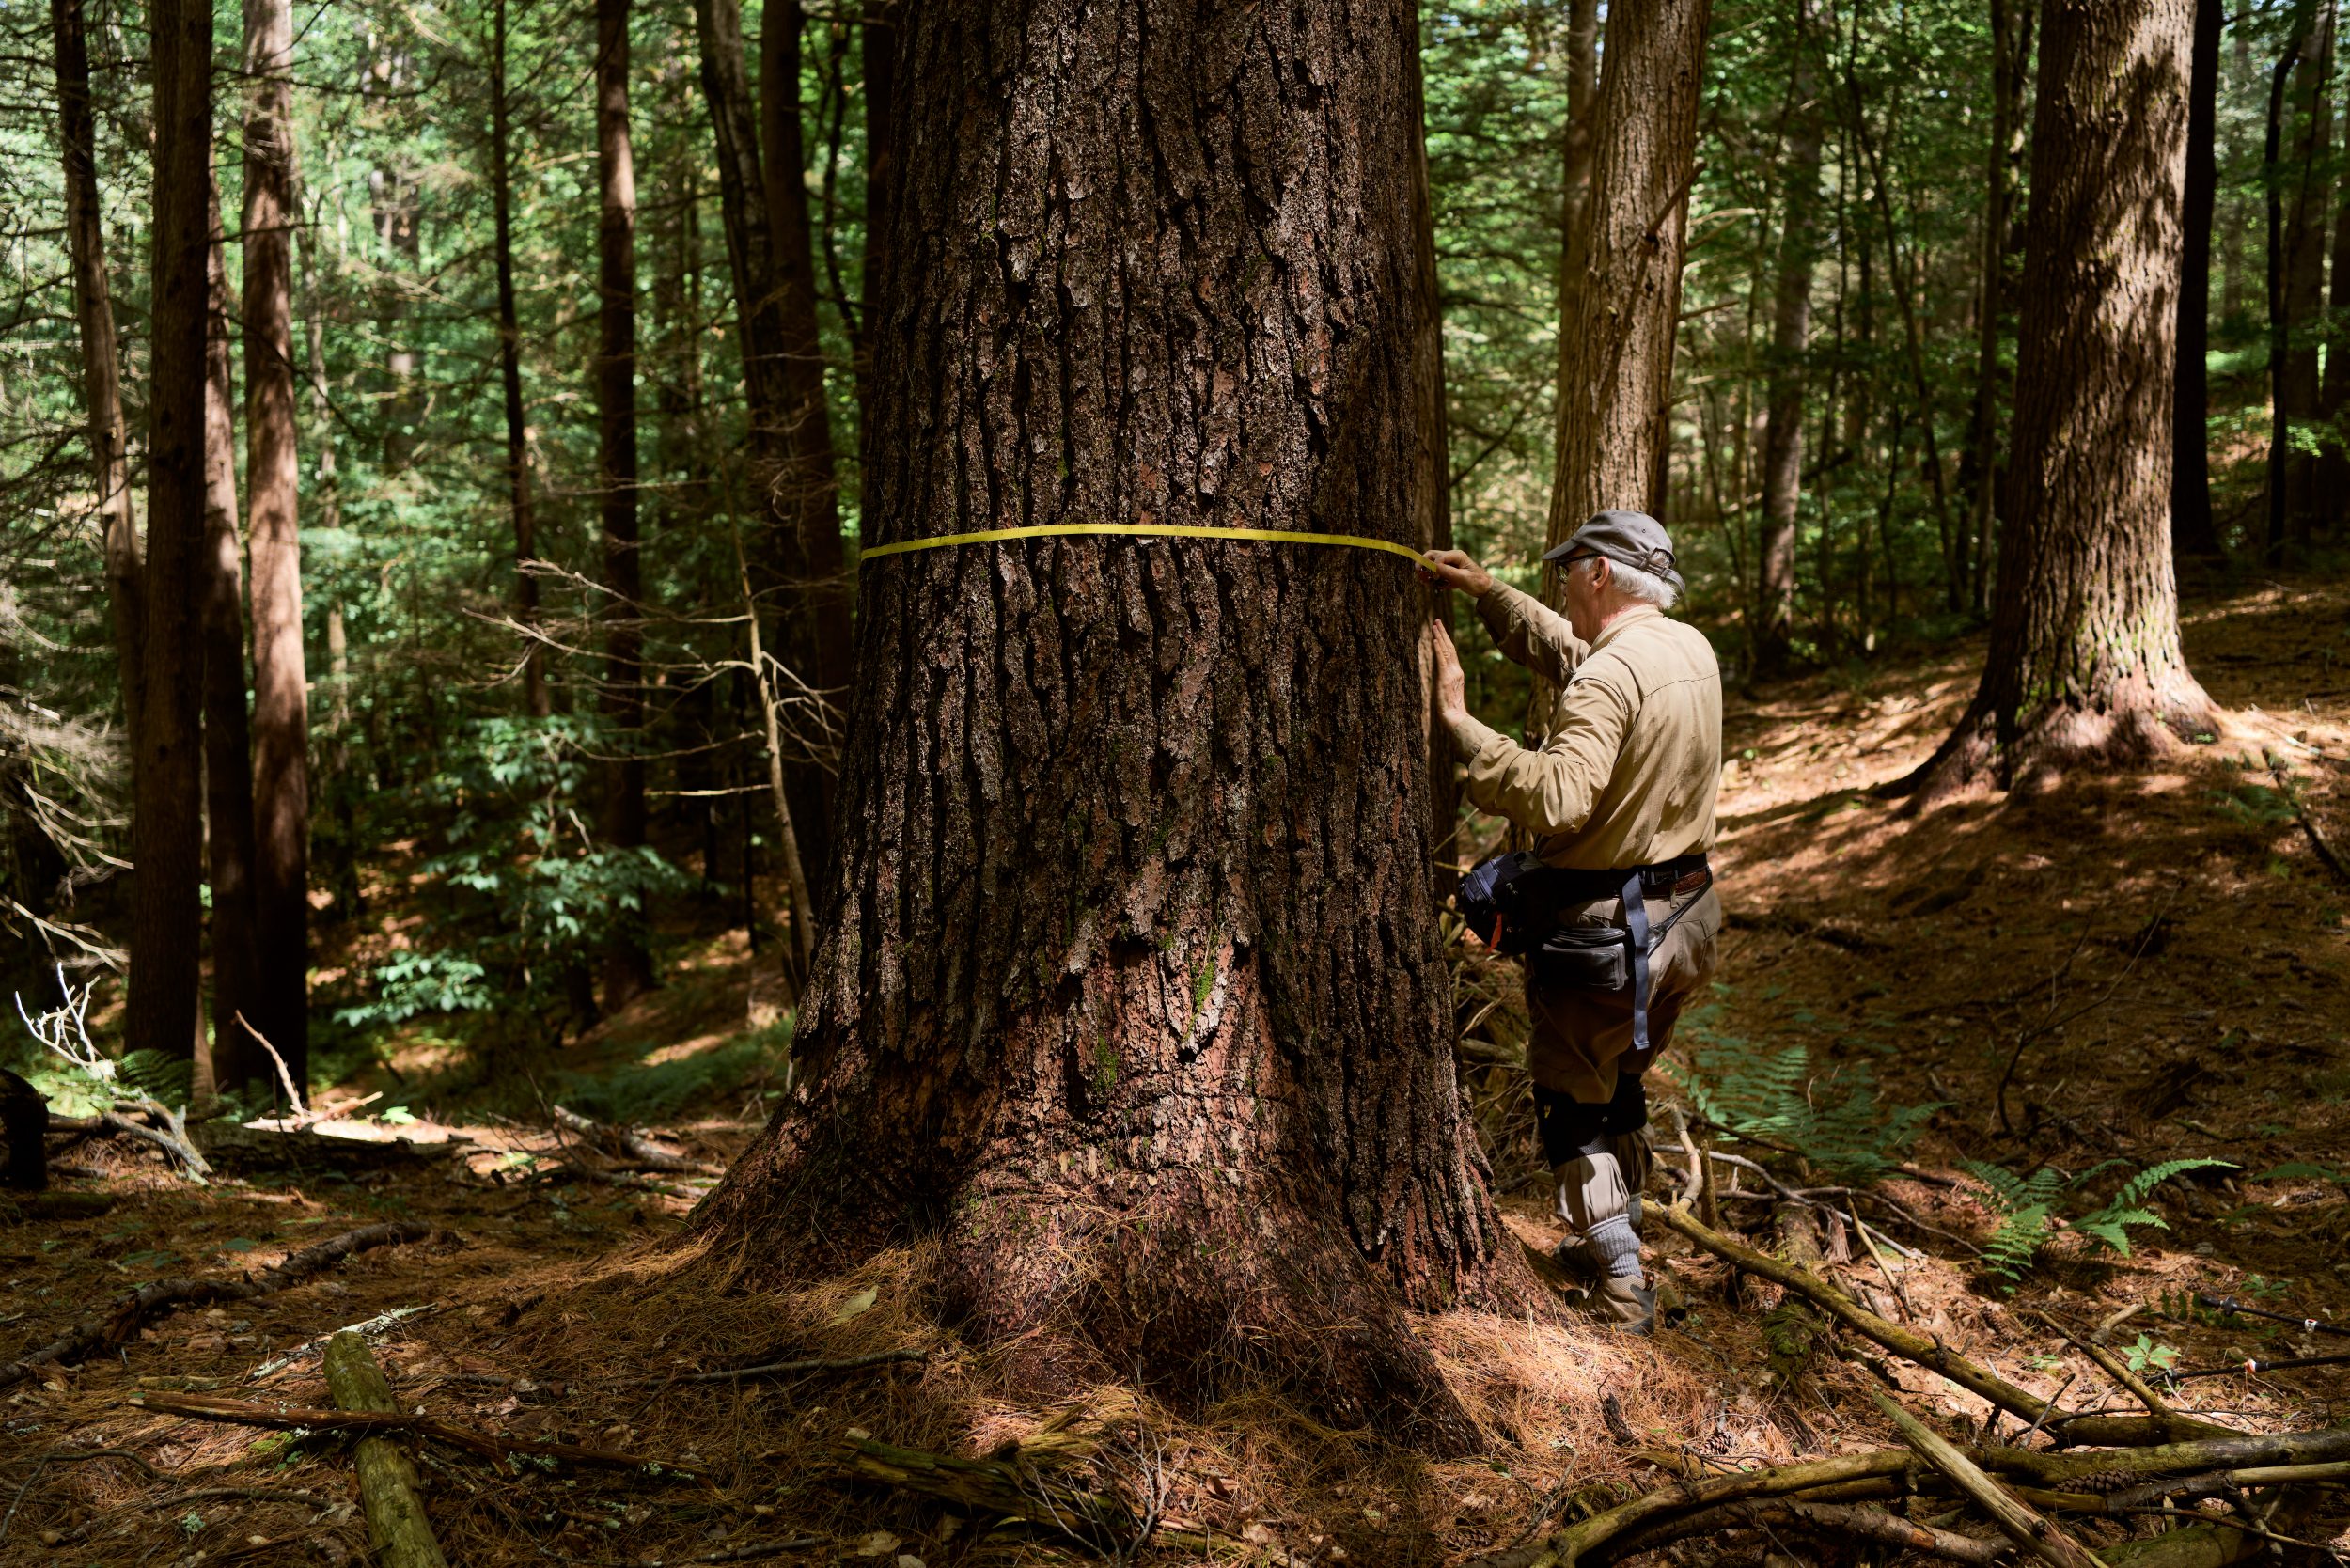 Robert Leverett measures a tall tree near Boston, Massachusetts